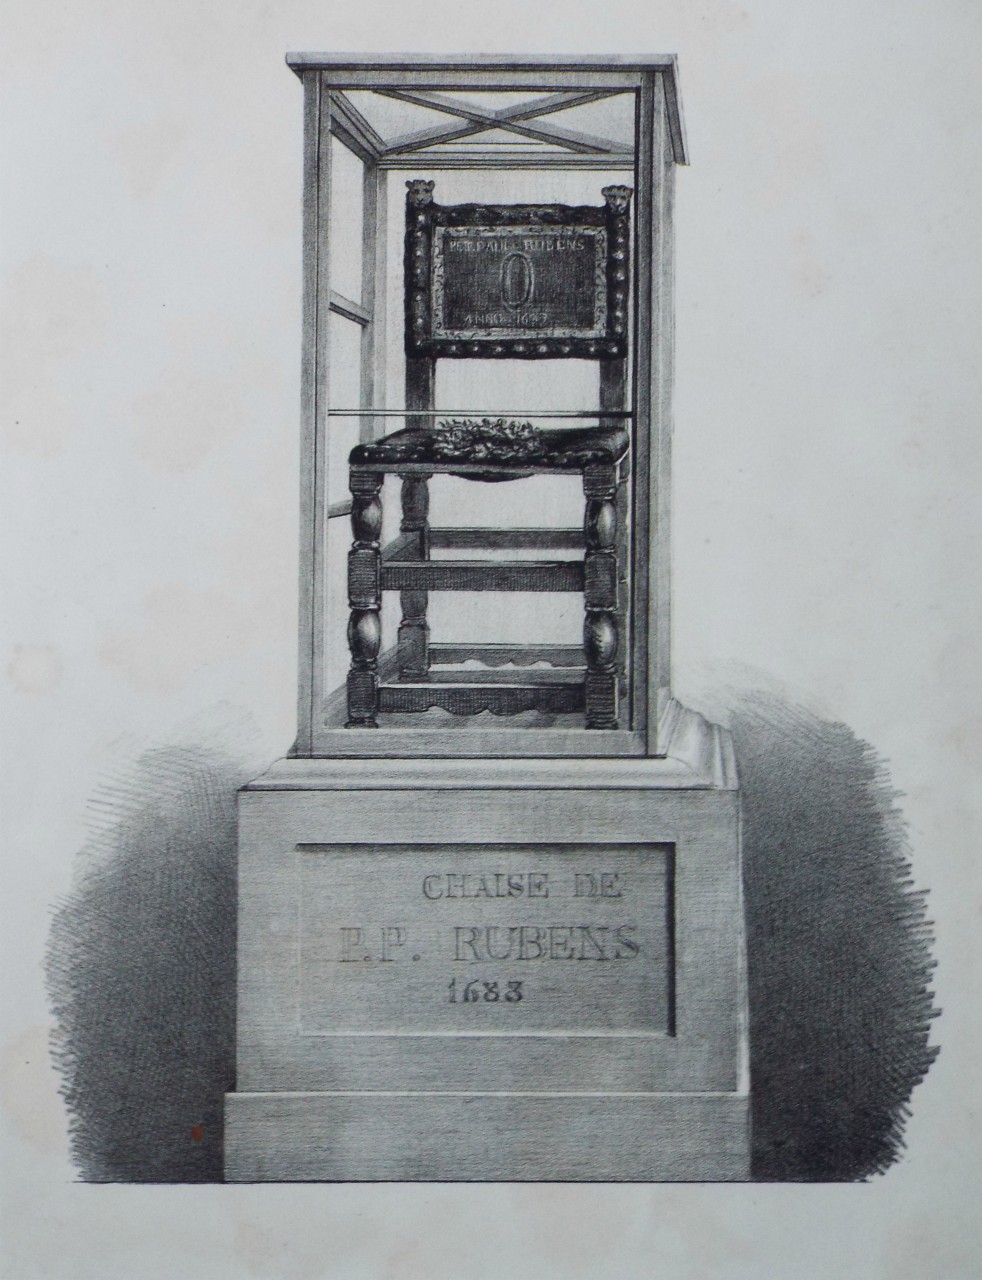 Lithograph - Chaise de P. P. Rubens 1633